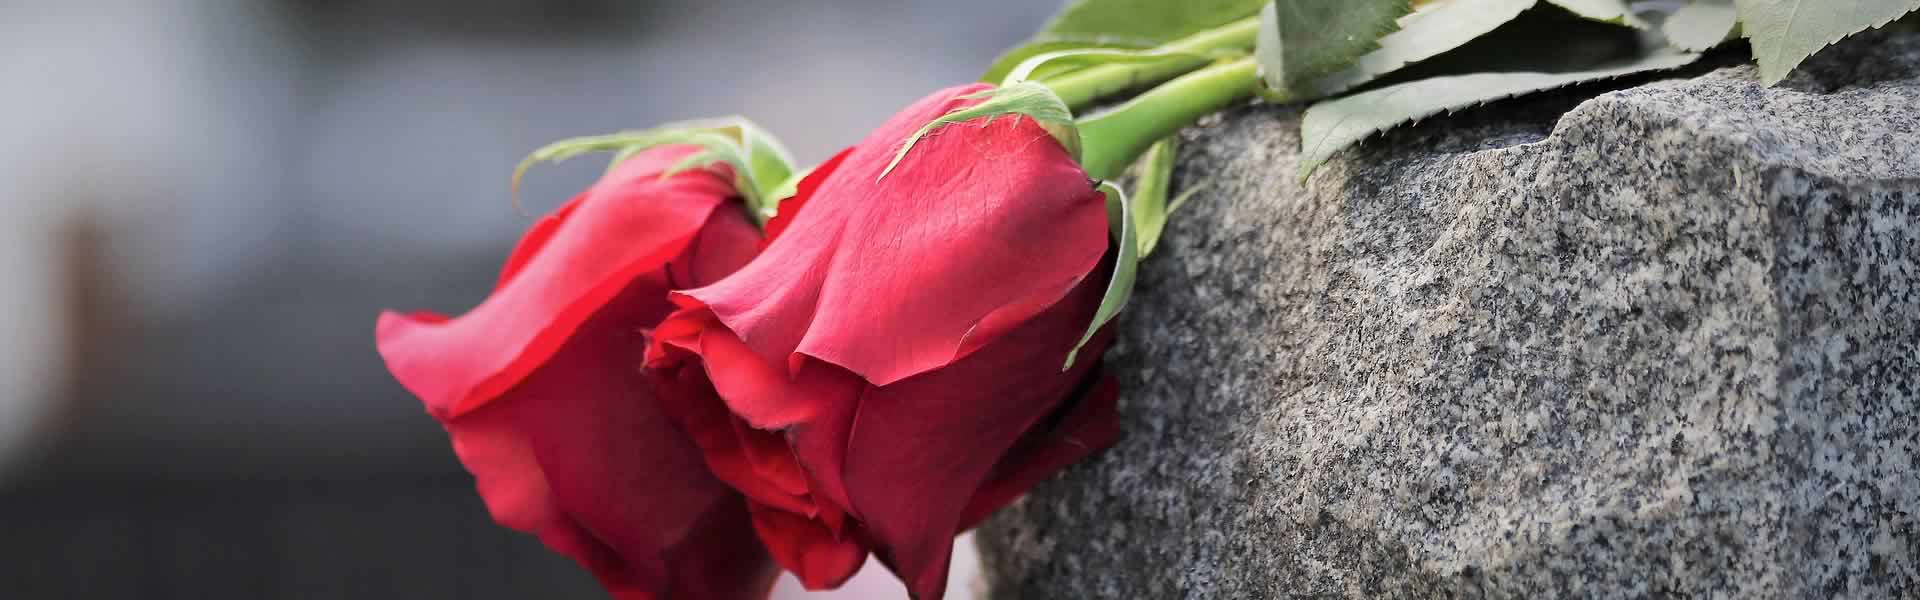 Rose e fiori per lapide cimiteriale